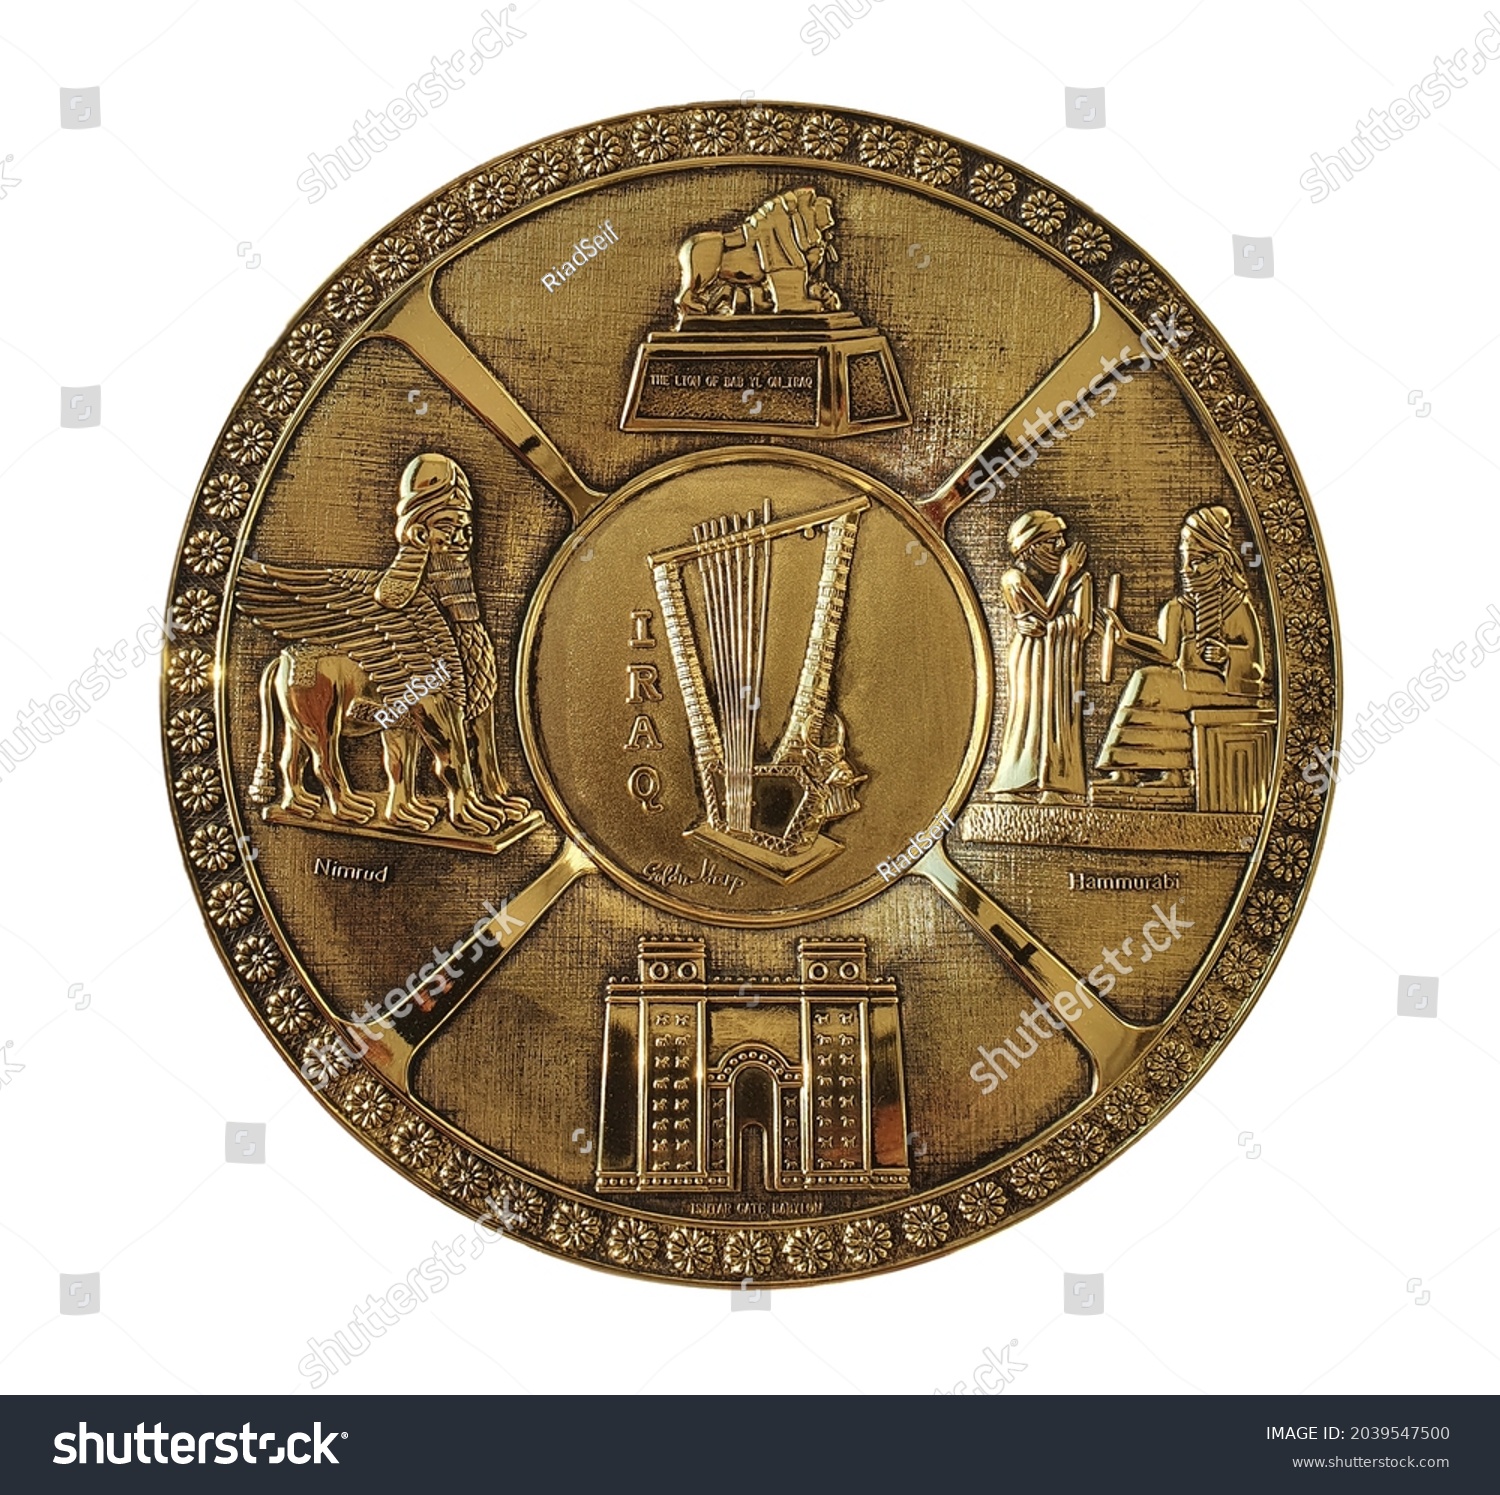 souvenir from iraq. plate with historical symbols (Nummrud, Hammurabi, Ihstar Babylon, Harb, The Lion of BAB) #2039547500